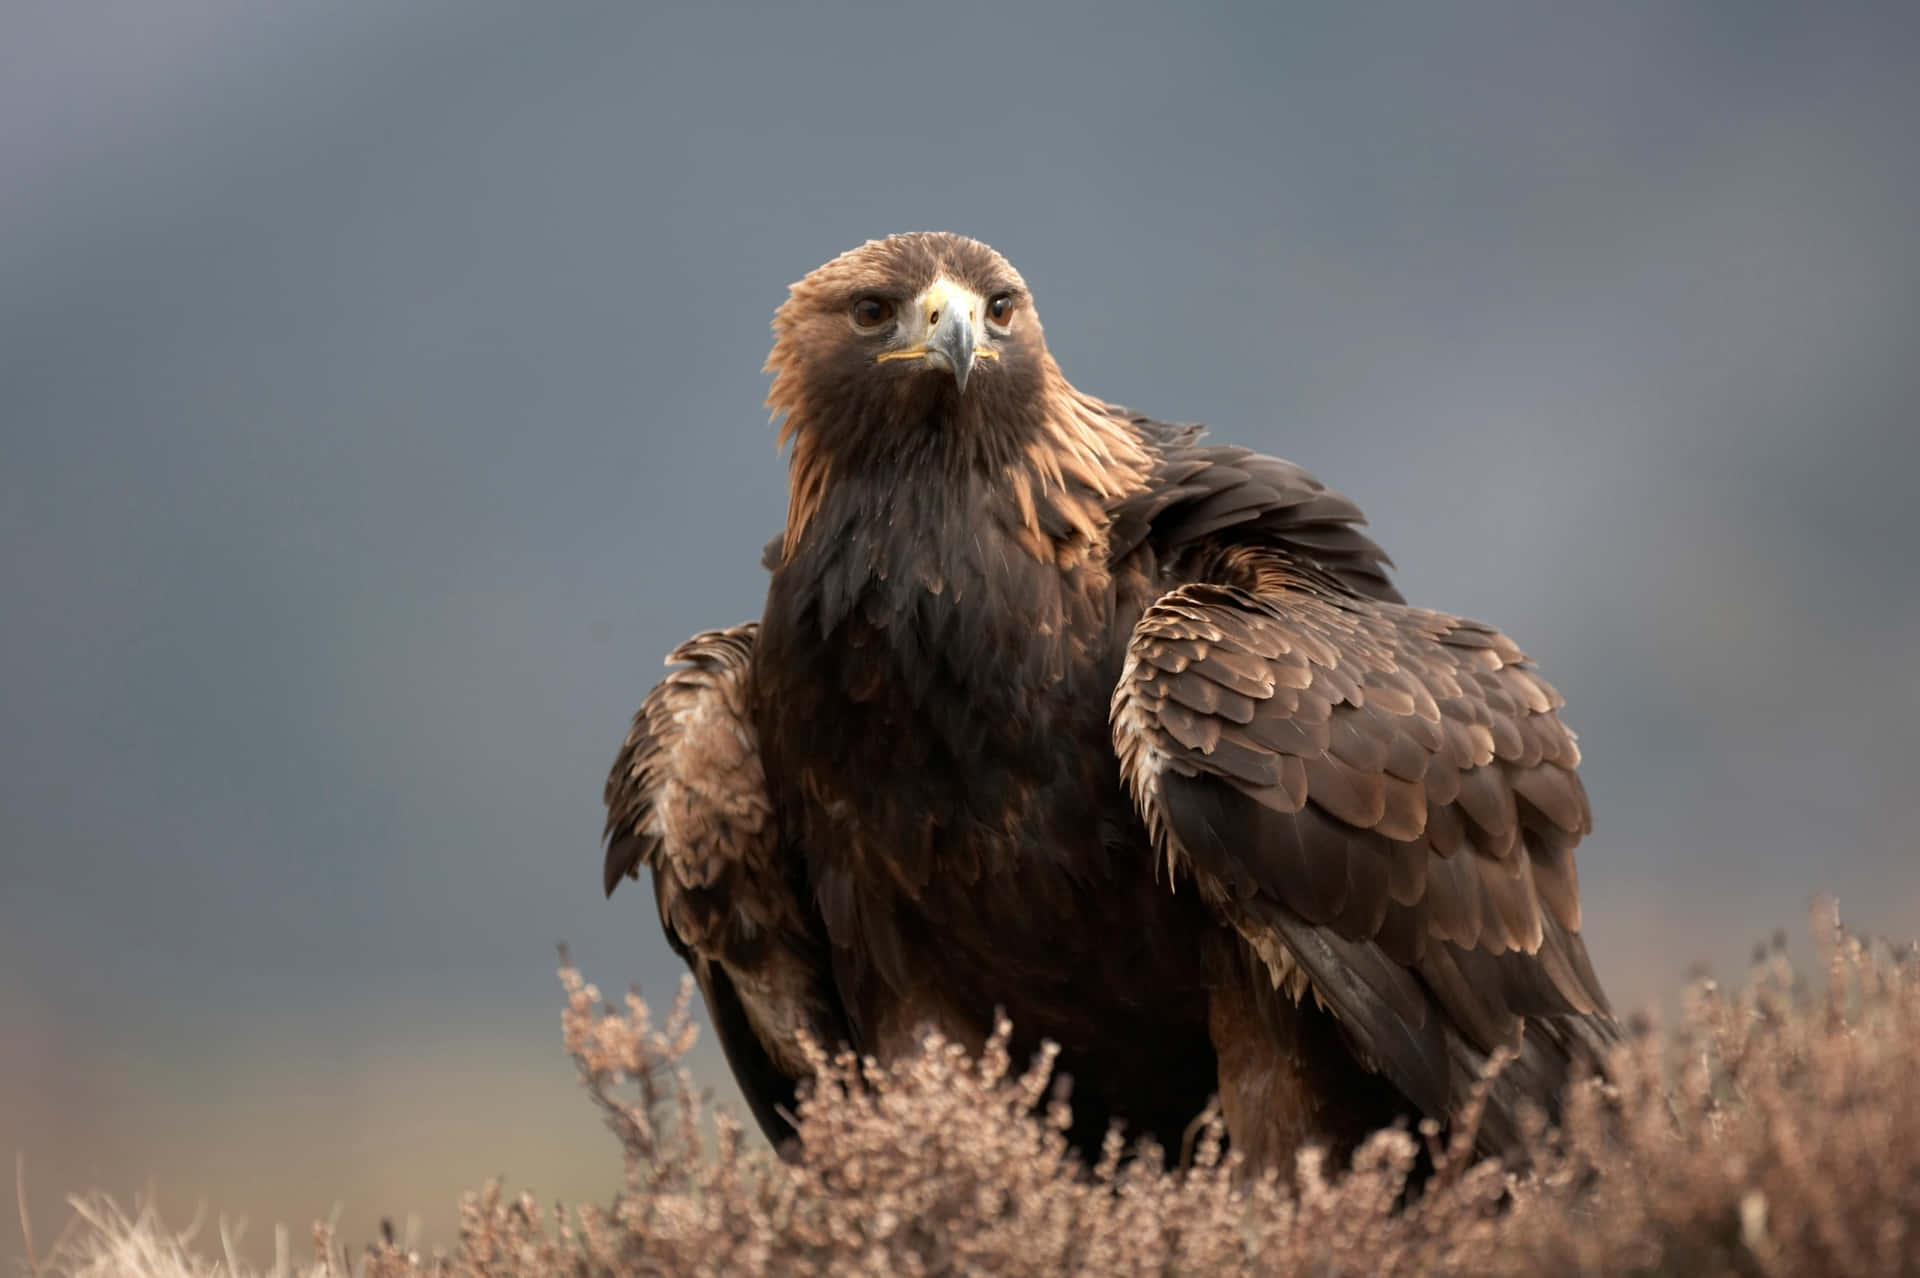 Magnificent Golden Eagle Soaring Over Mountain Range